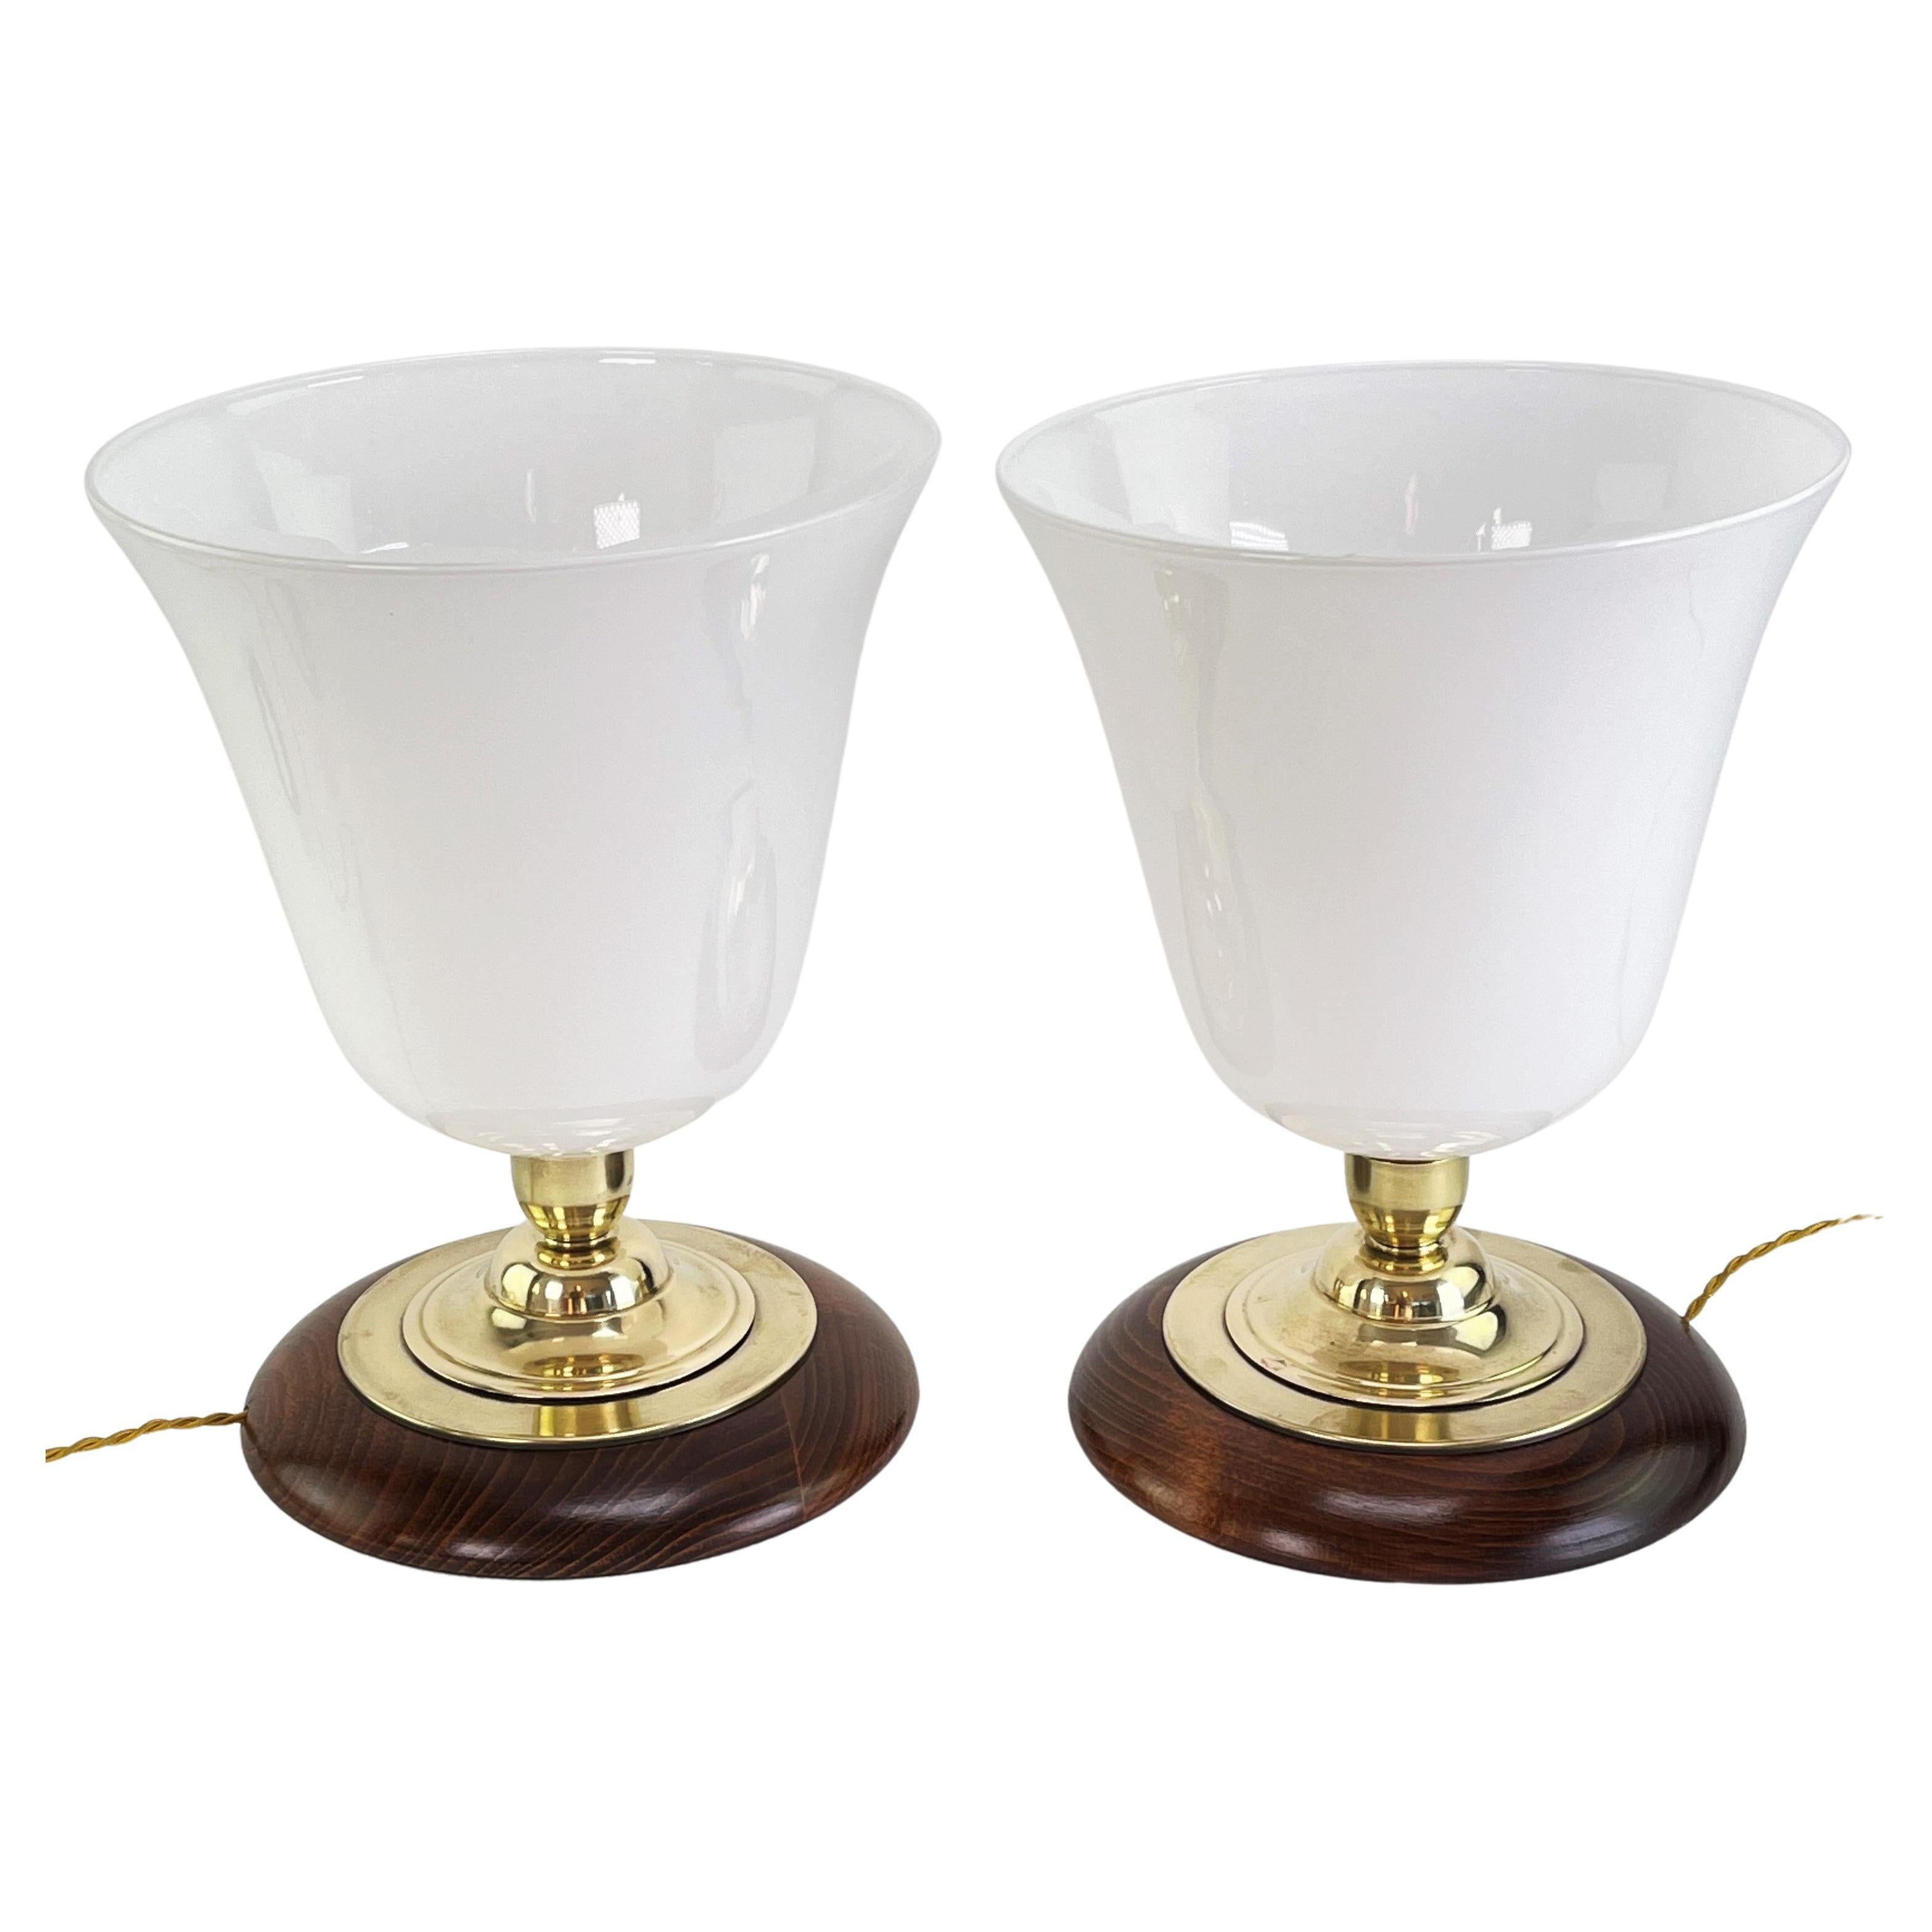 1 set of 2 rare MAZDA lamps table lamps ART DECO CLASSICS